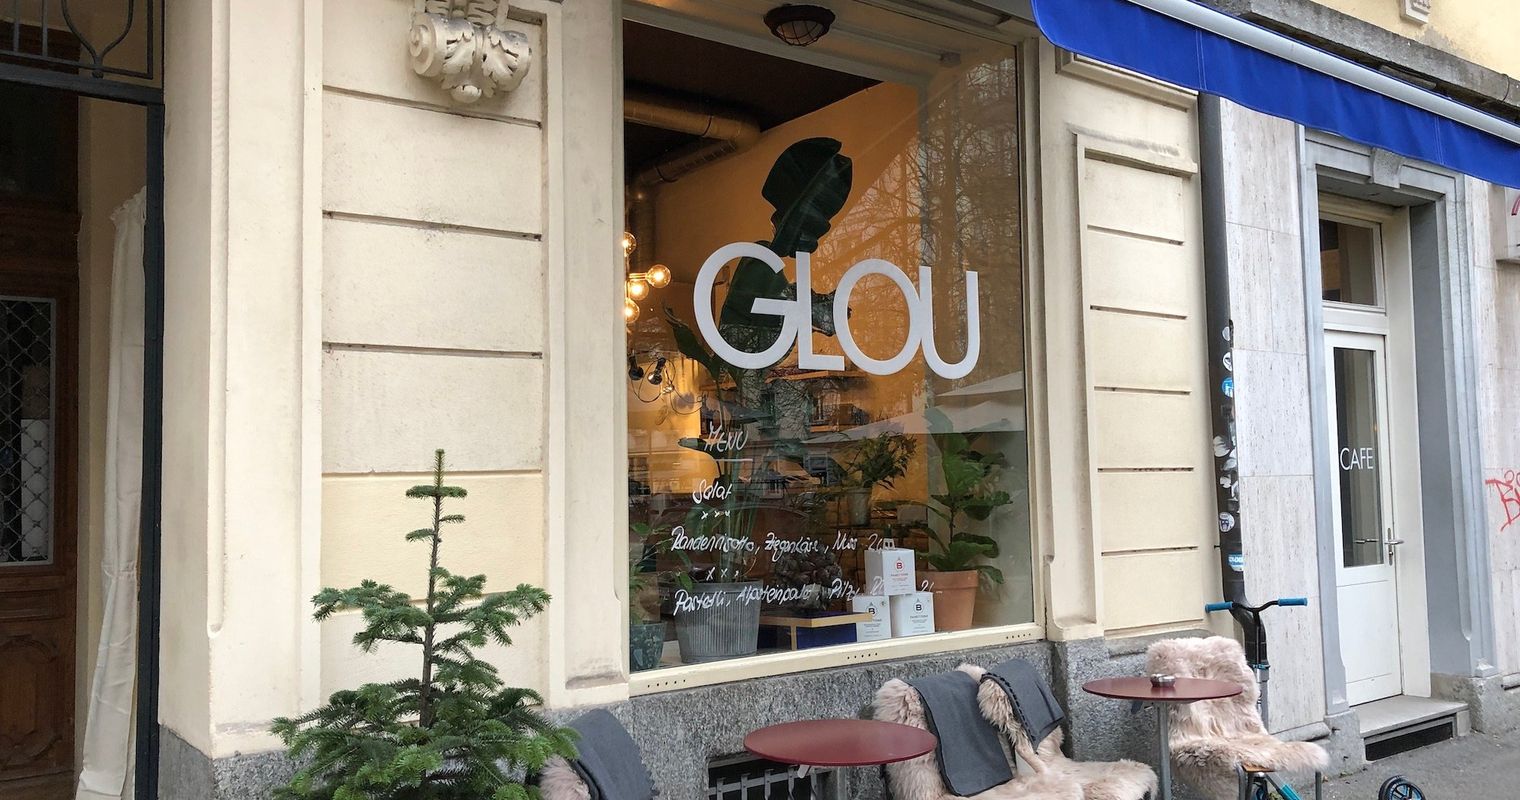 Gault Millau kürt Luzerner Weinbar «Glou Glou»